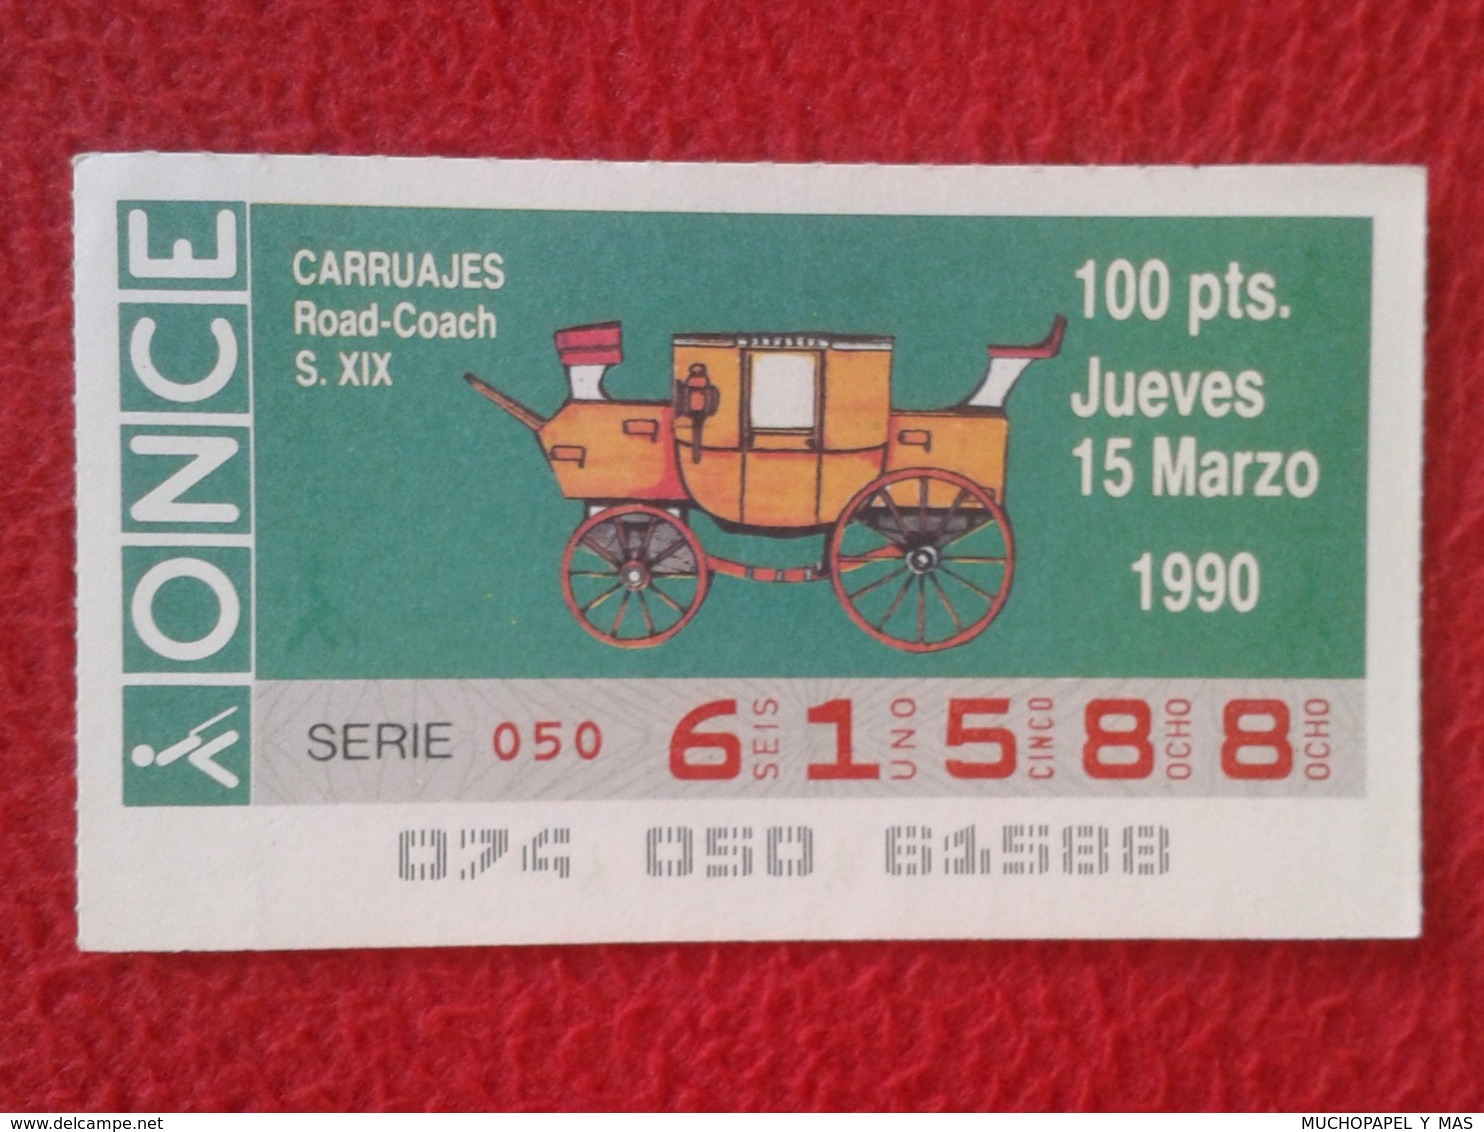 CUPÓN DE ONCE SPANISH LOTTERY LOTERIE SPAIN CIEGOS BLIND LOTERÍA CARRUAJES CARRUAJE CARRIAGE CARRIAGES ROAD-COACH S. XIX - Billetes De Lotería